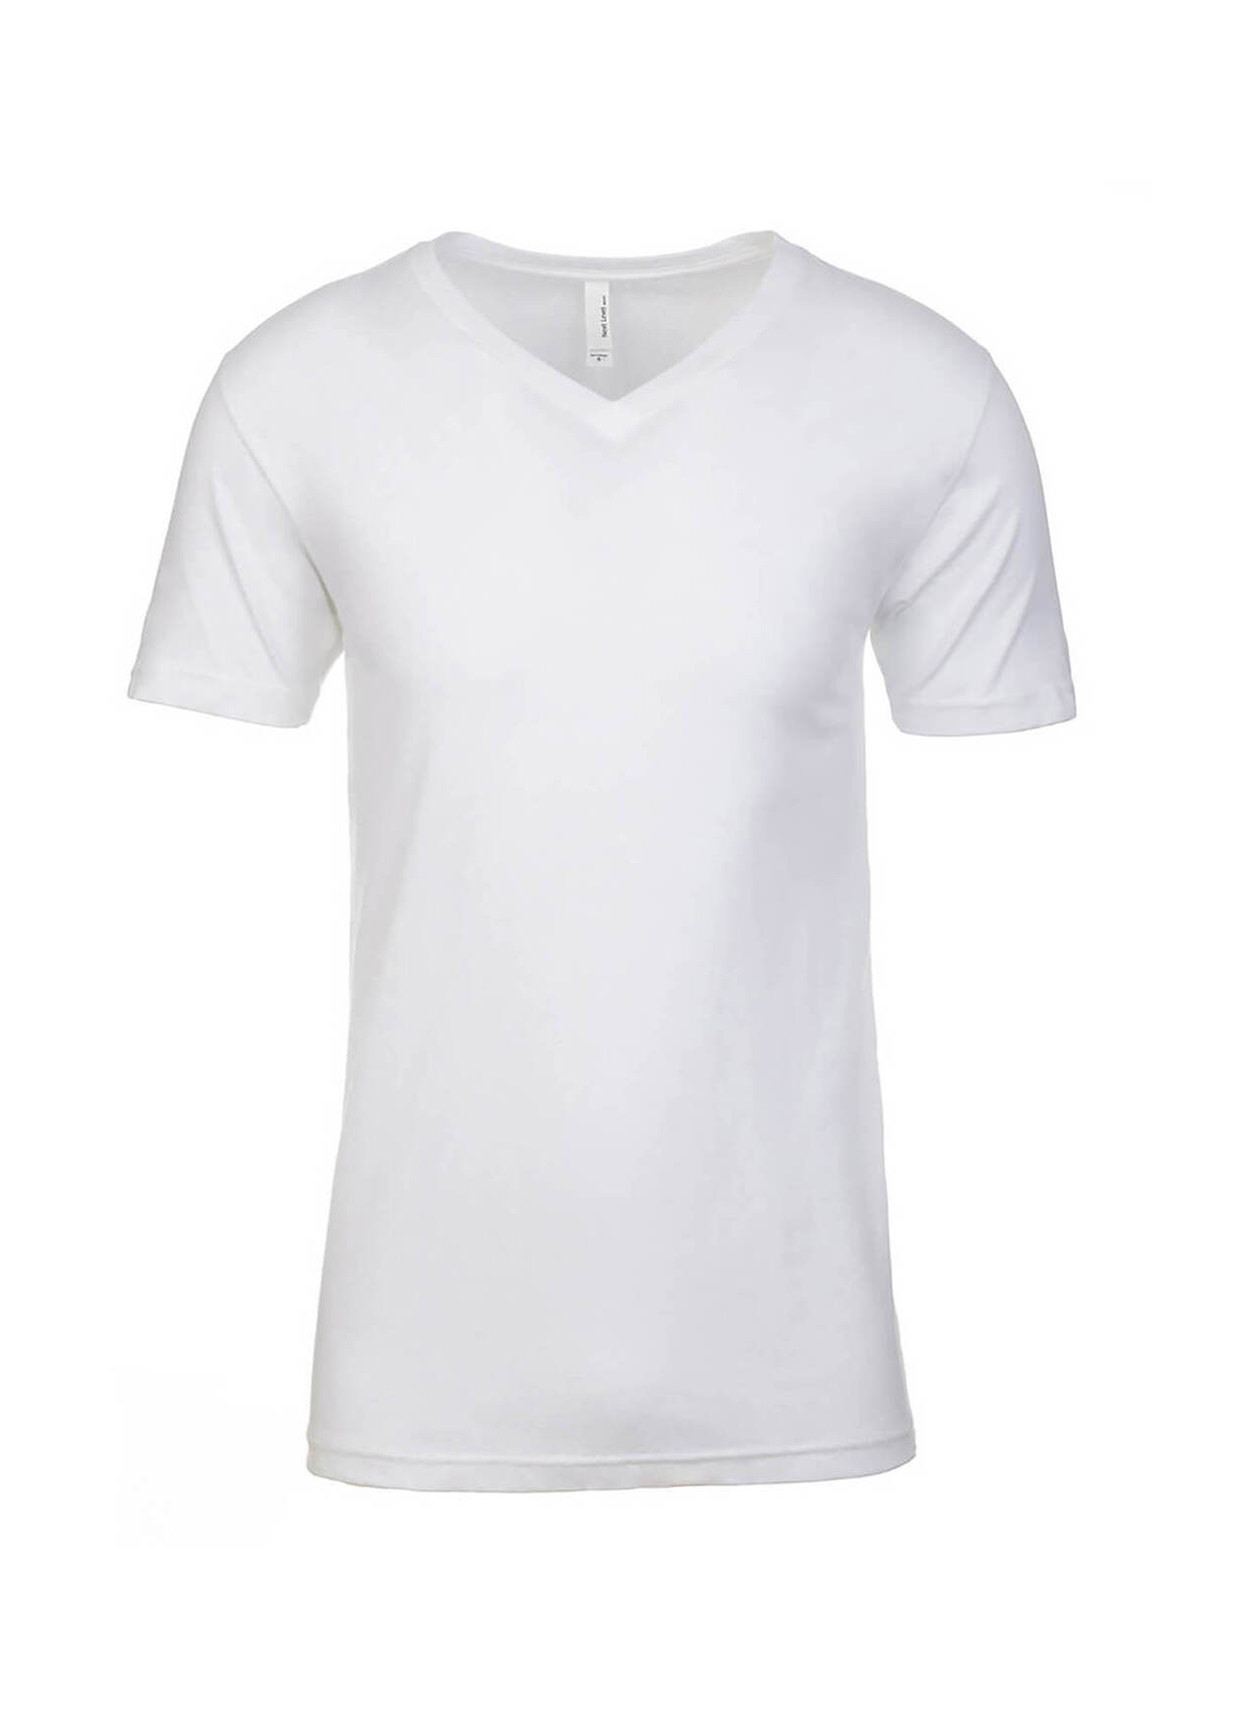 Next Level Men's White Sueded V-Neck T-Shirt